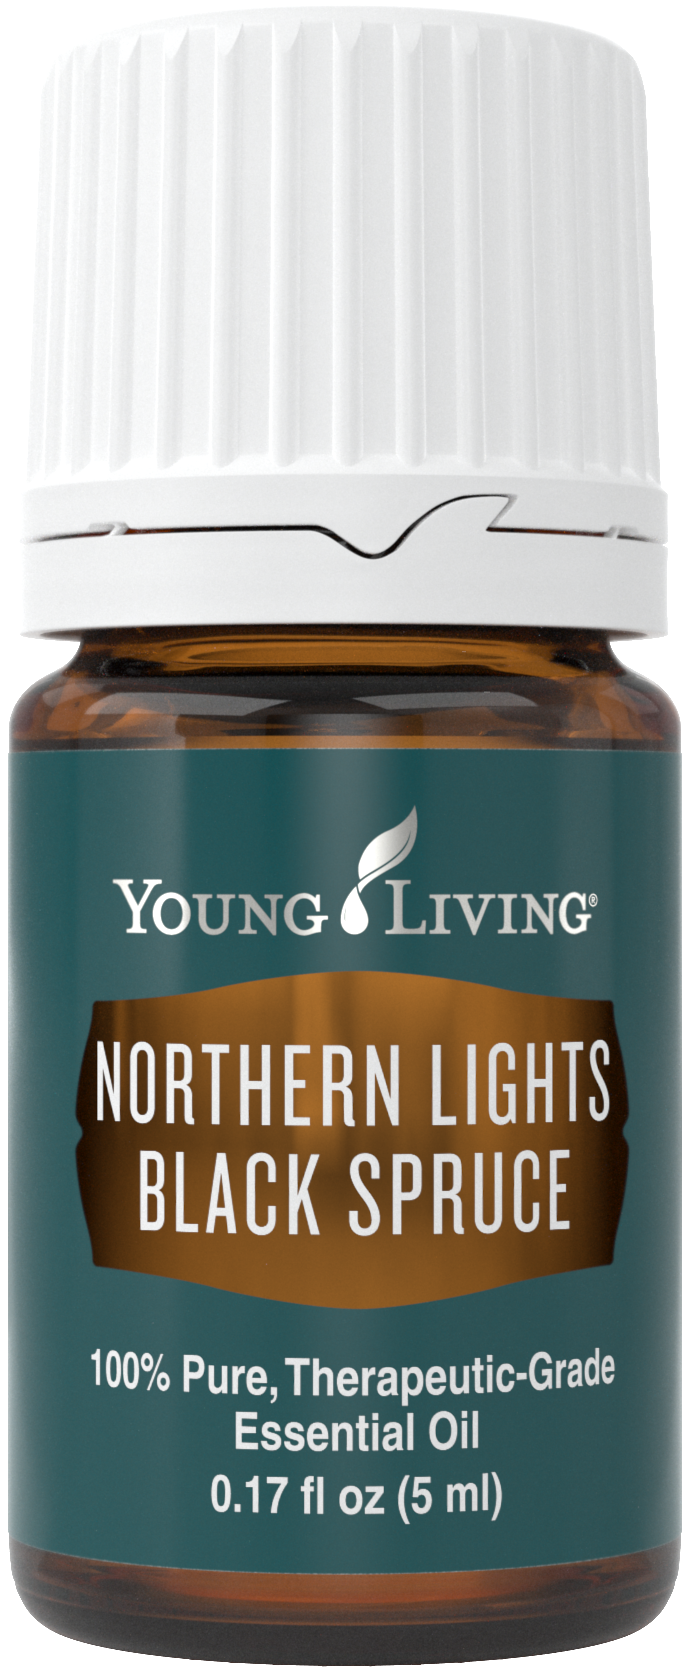 Northern Lights Black Spruce 5ml Silo.png